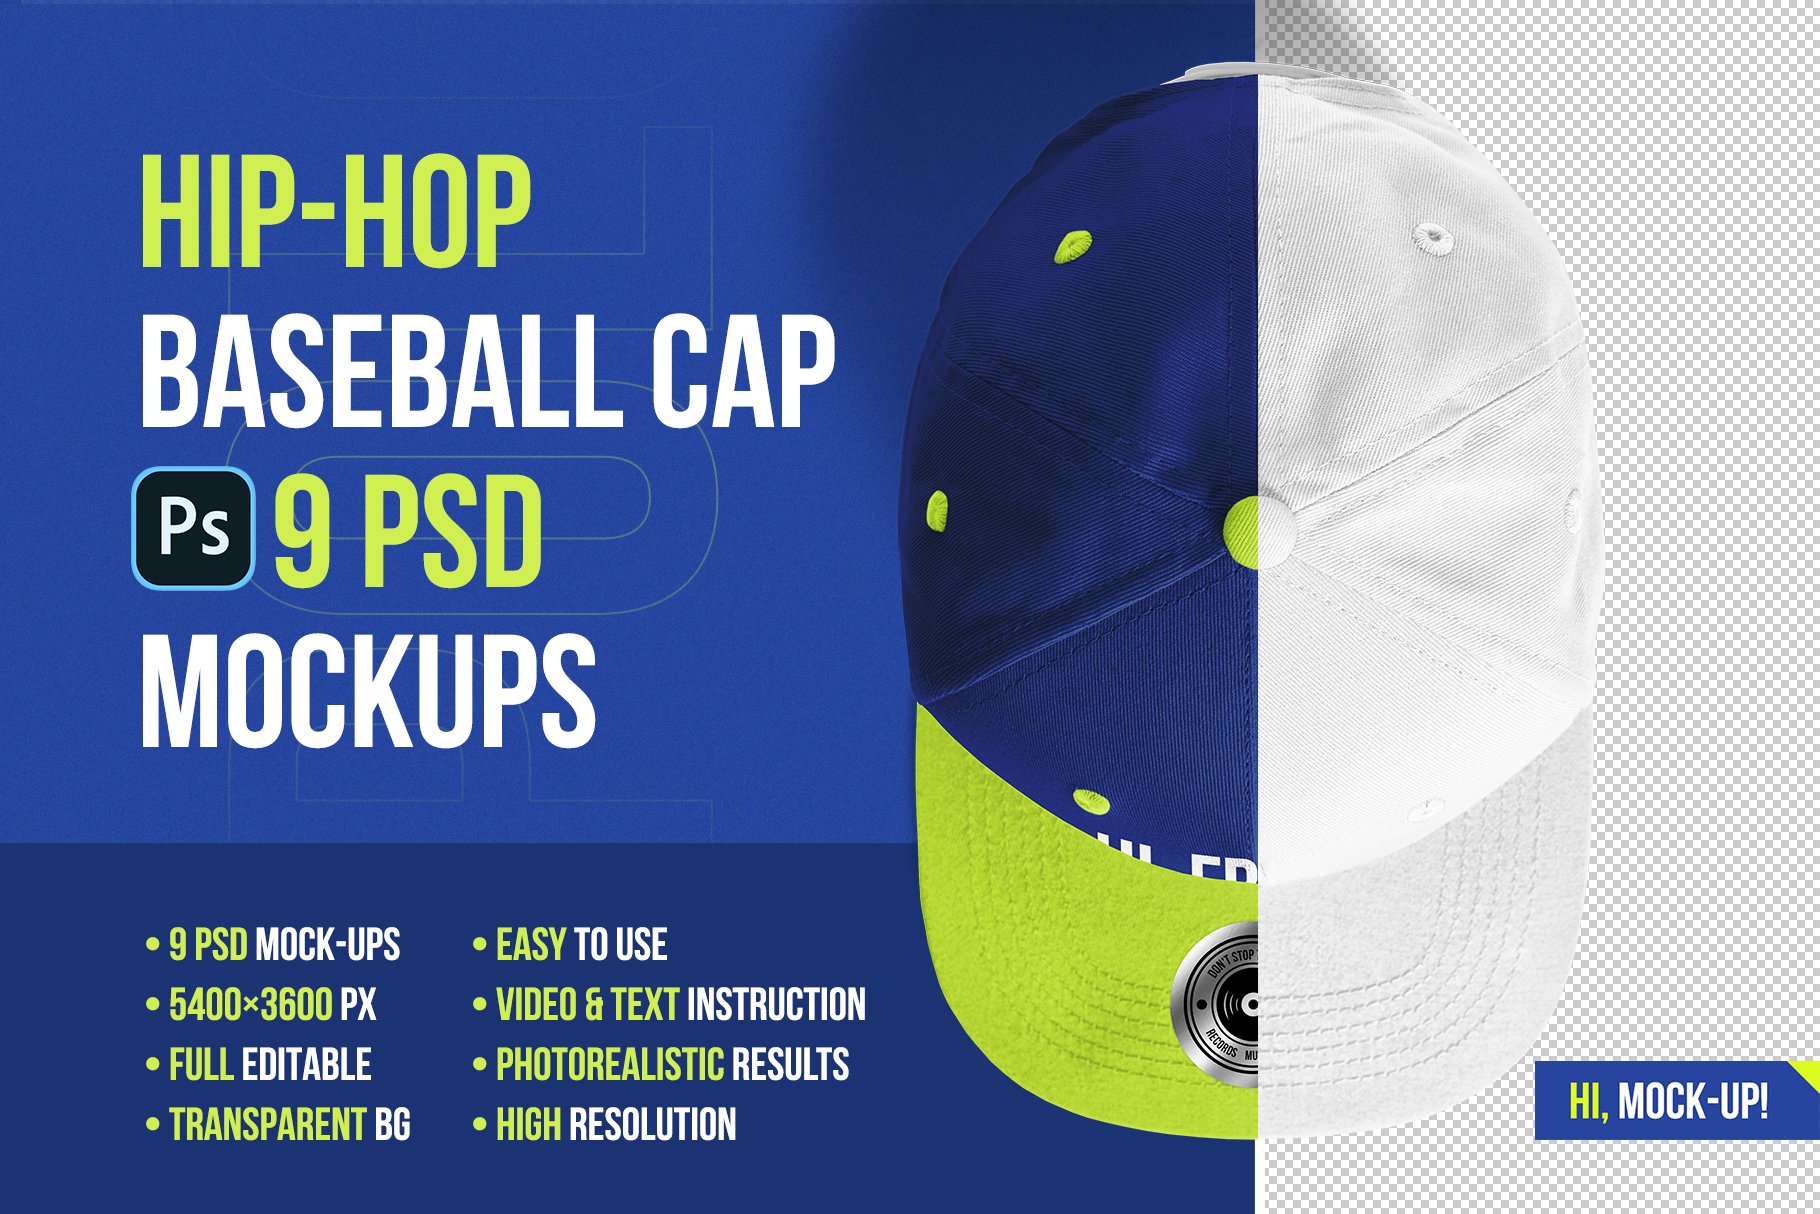 Hip-Hop Baseball Cap Mockups cover image.